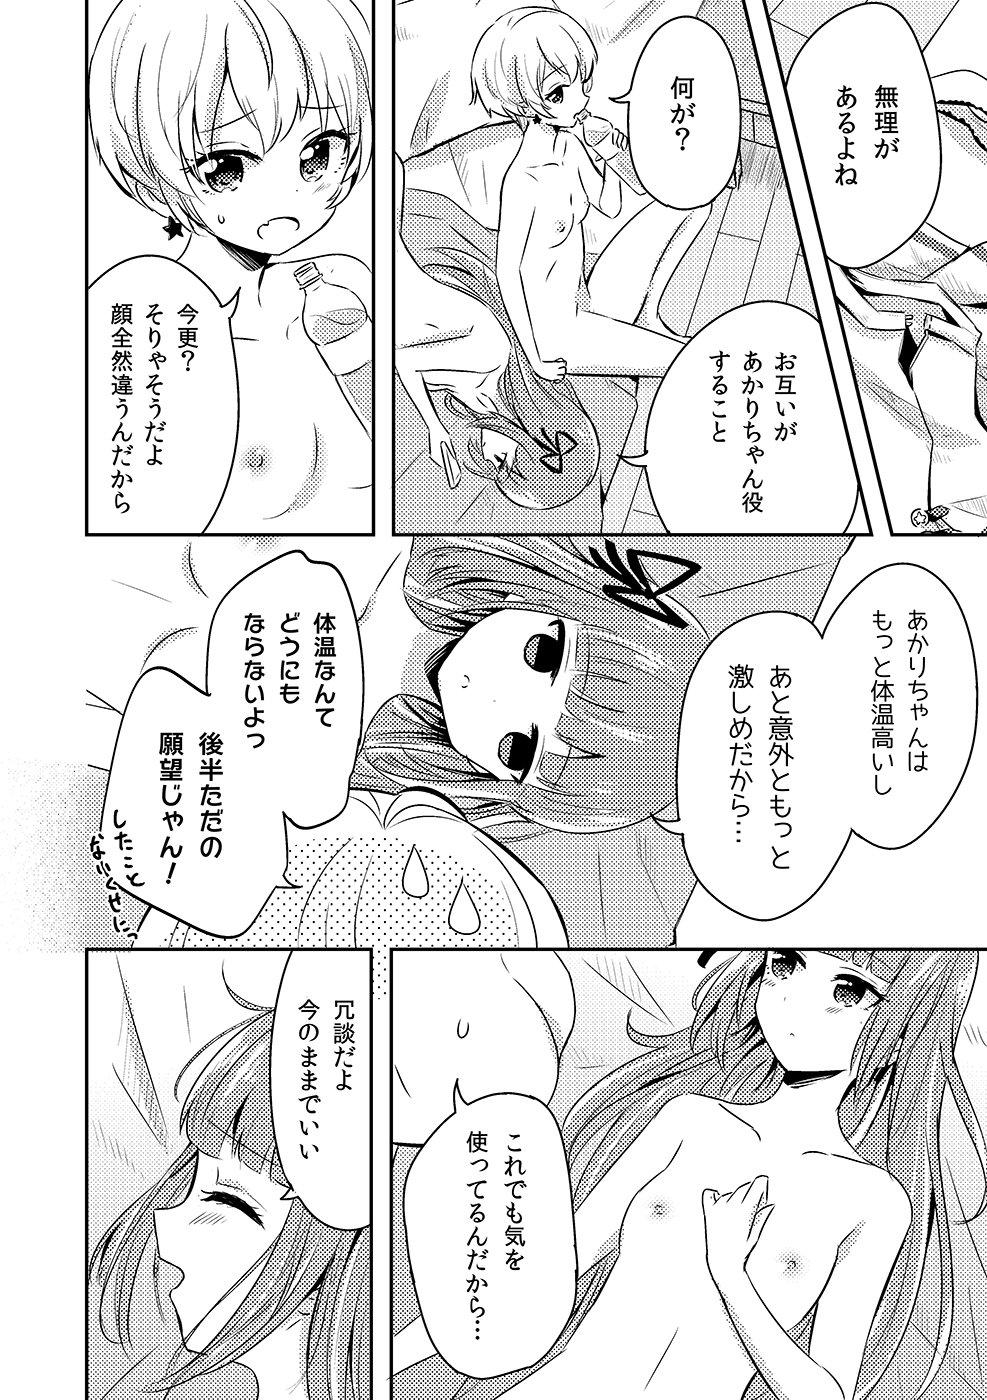 Assgape Who contributed to loveless sex joint two years ago! Yuusumi manga. - Aikatsu Femdom Pov - Page 2